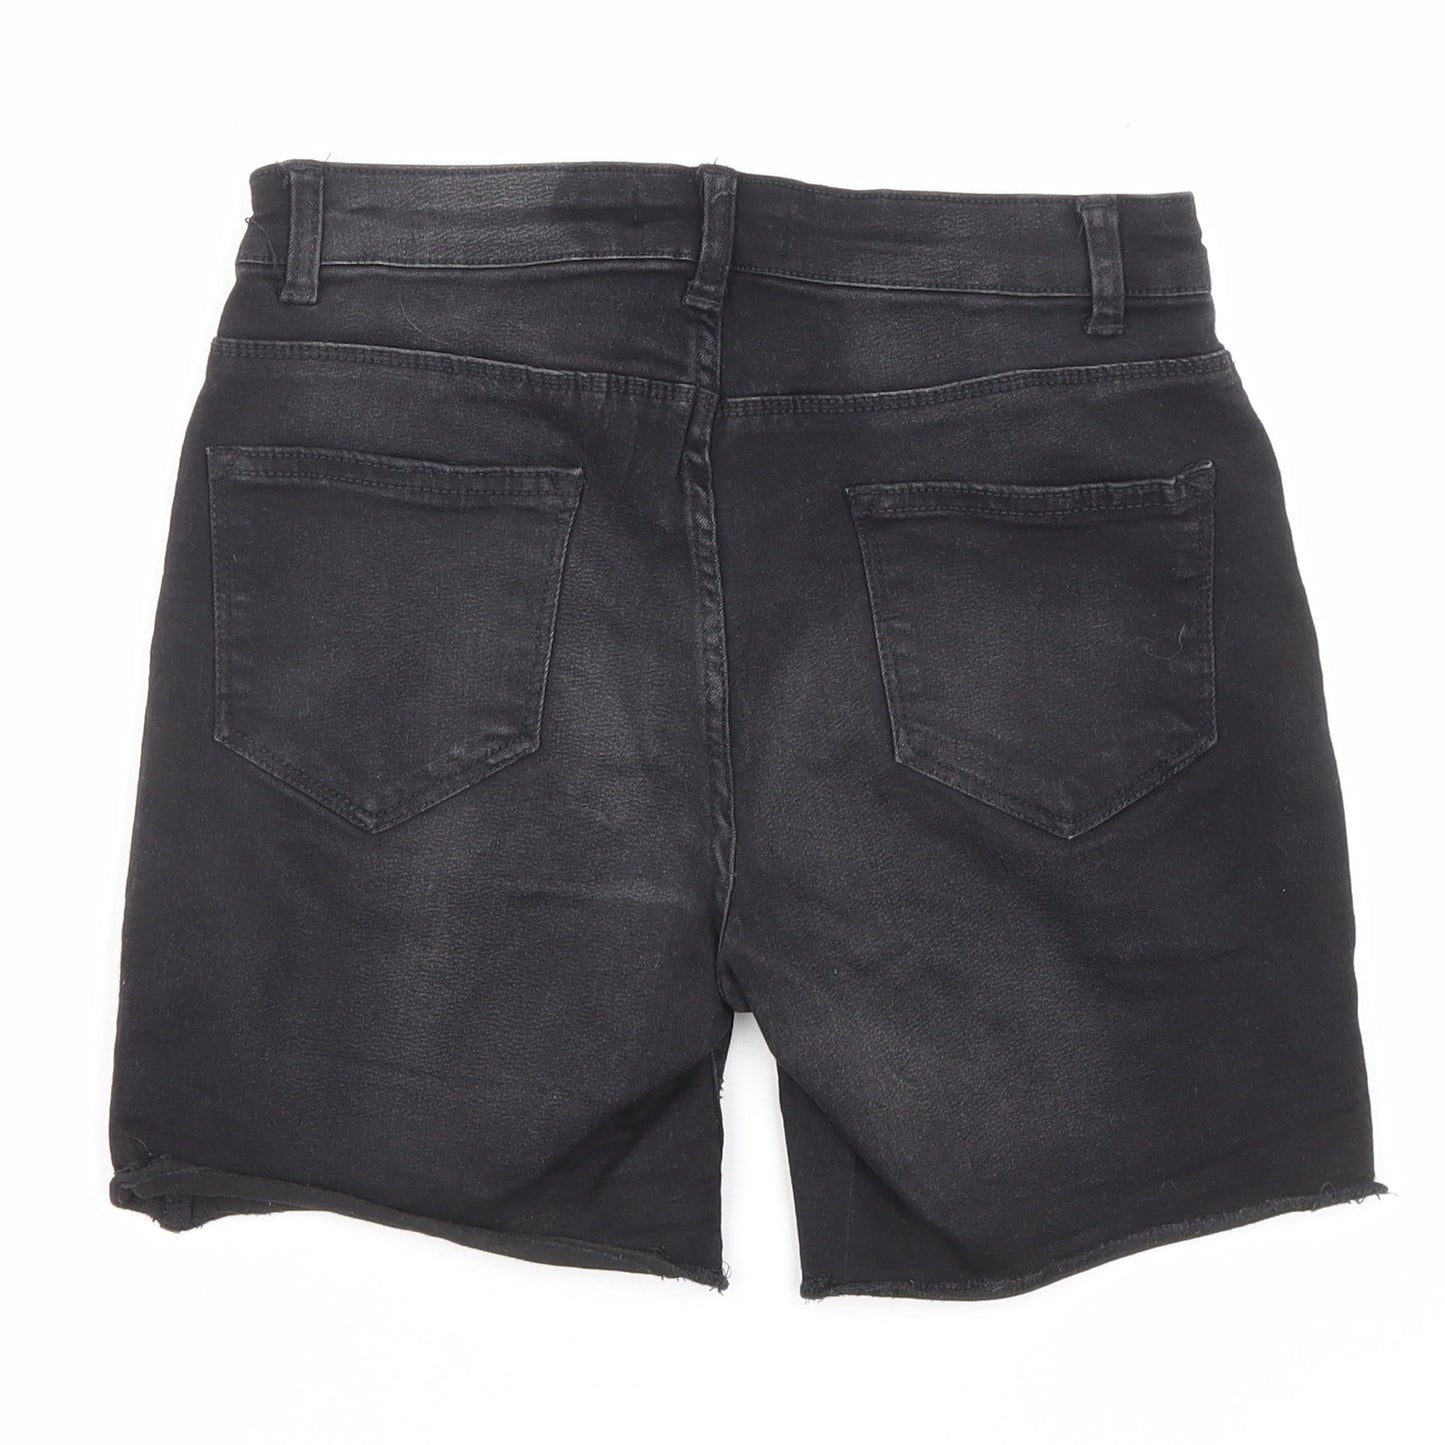 Denim & Co. Womens Black Cotton Cut-Off Shorts Size 8 Regular Zip